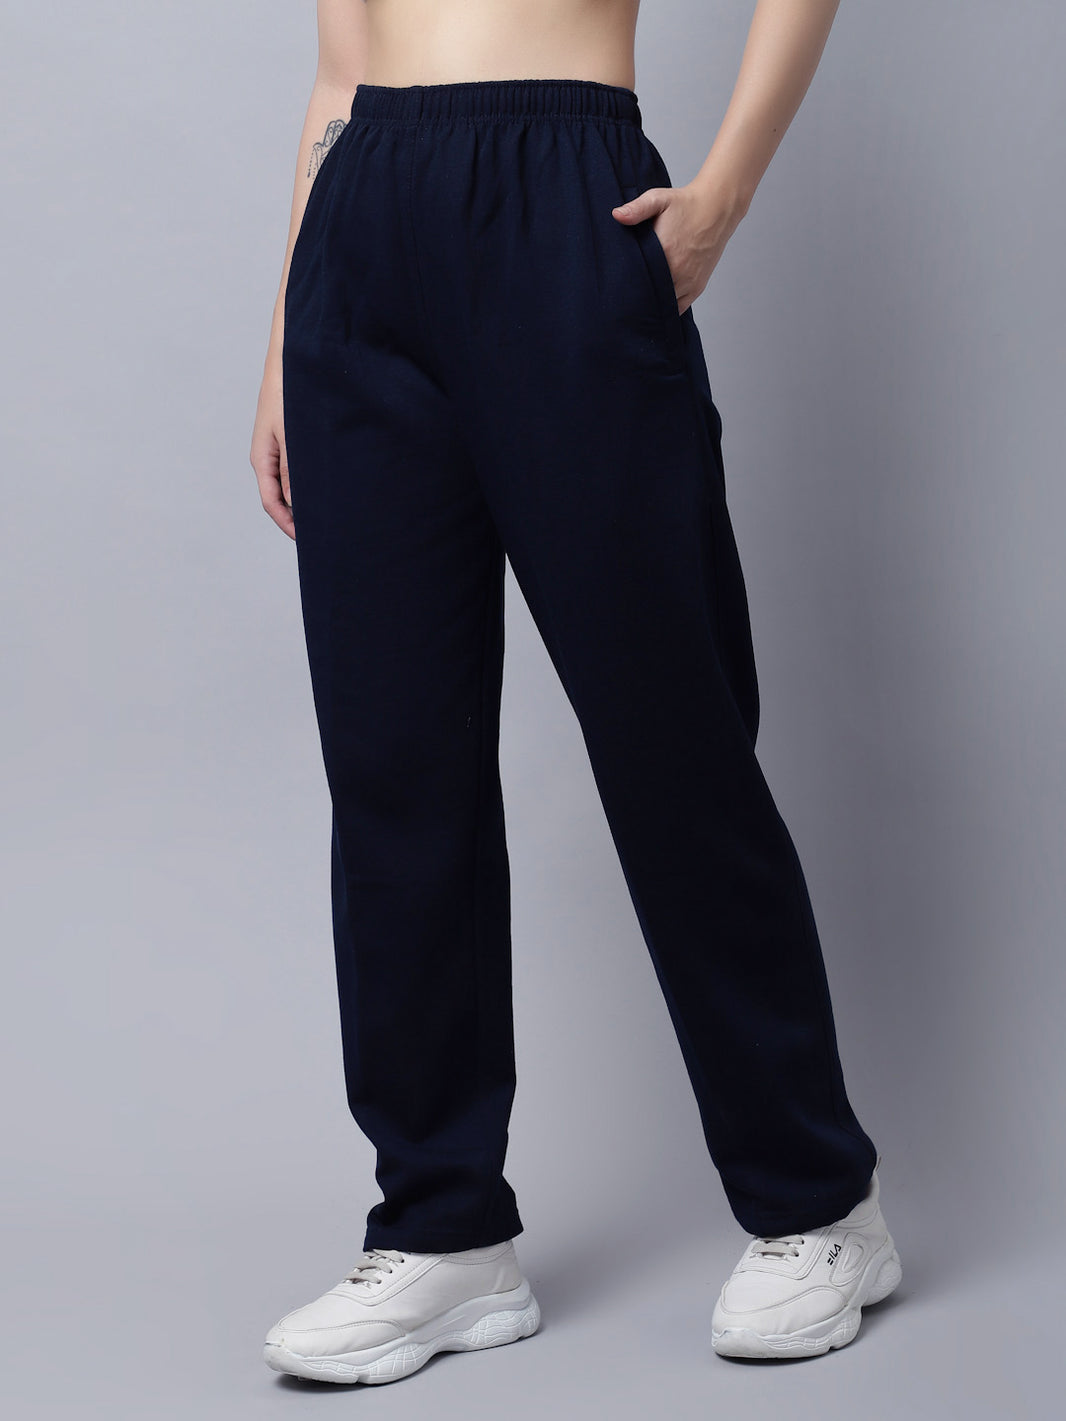 Buy DOLLAR Women Black Solid Fleece Thermal Pants Online at